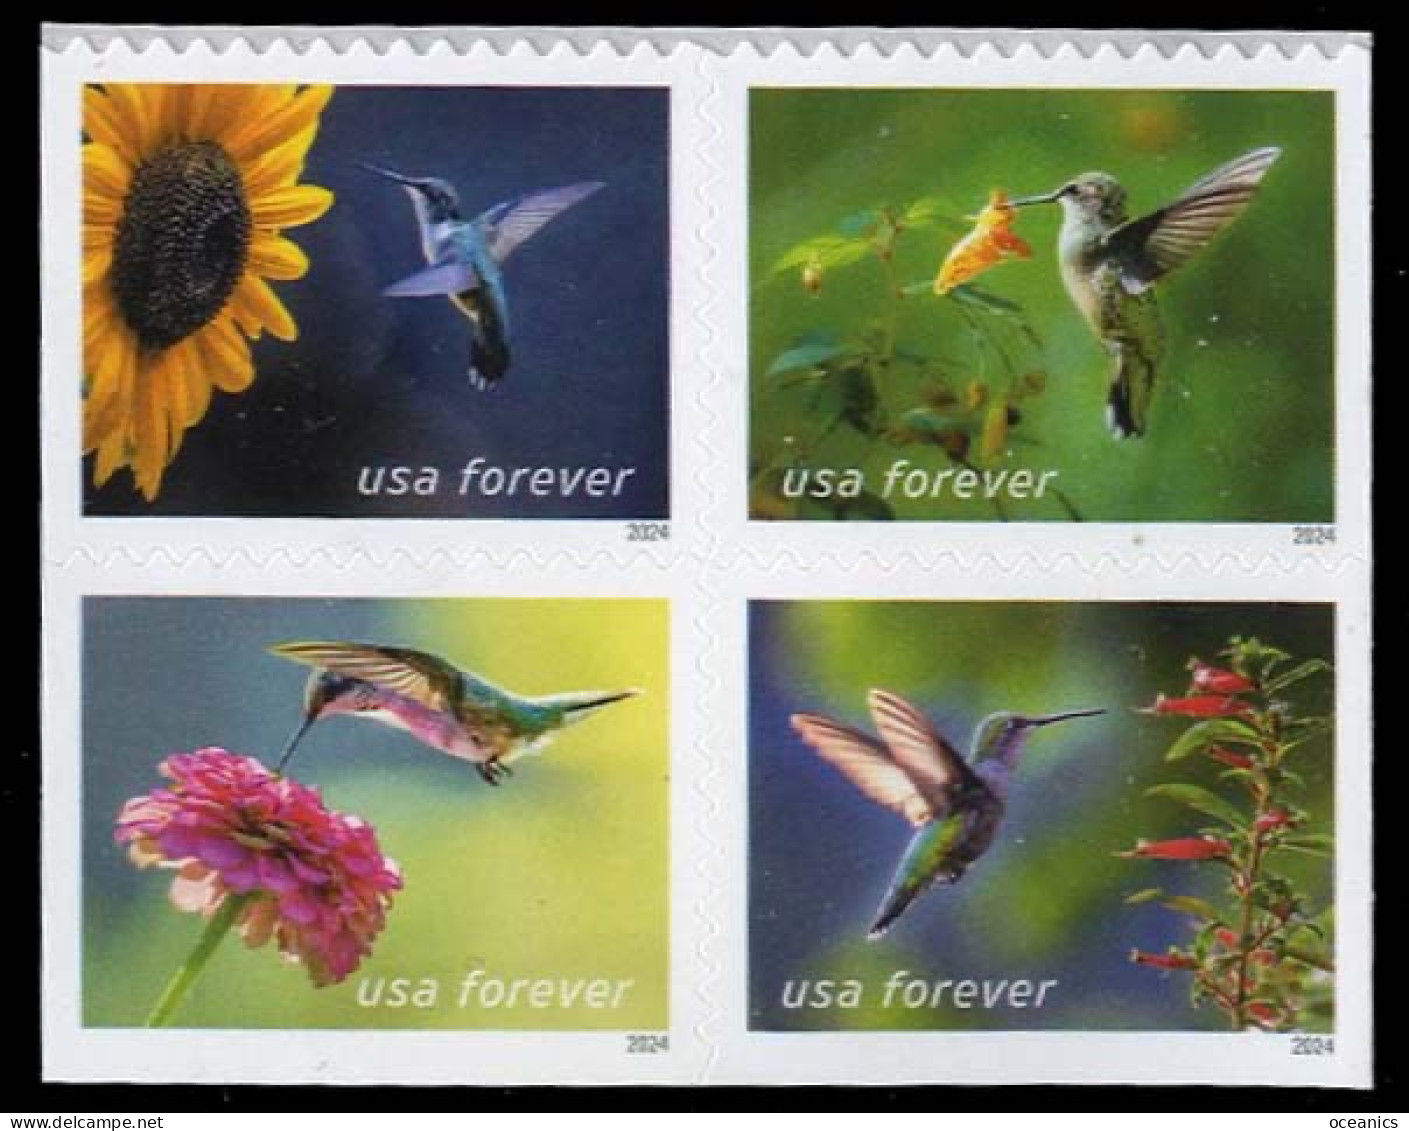 Etats-Unis / United States (Scott No.5848a - Garden Delights Forever Stamps) [**] Bloc Of 4 - Nuevos